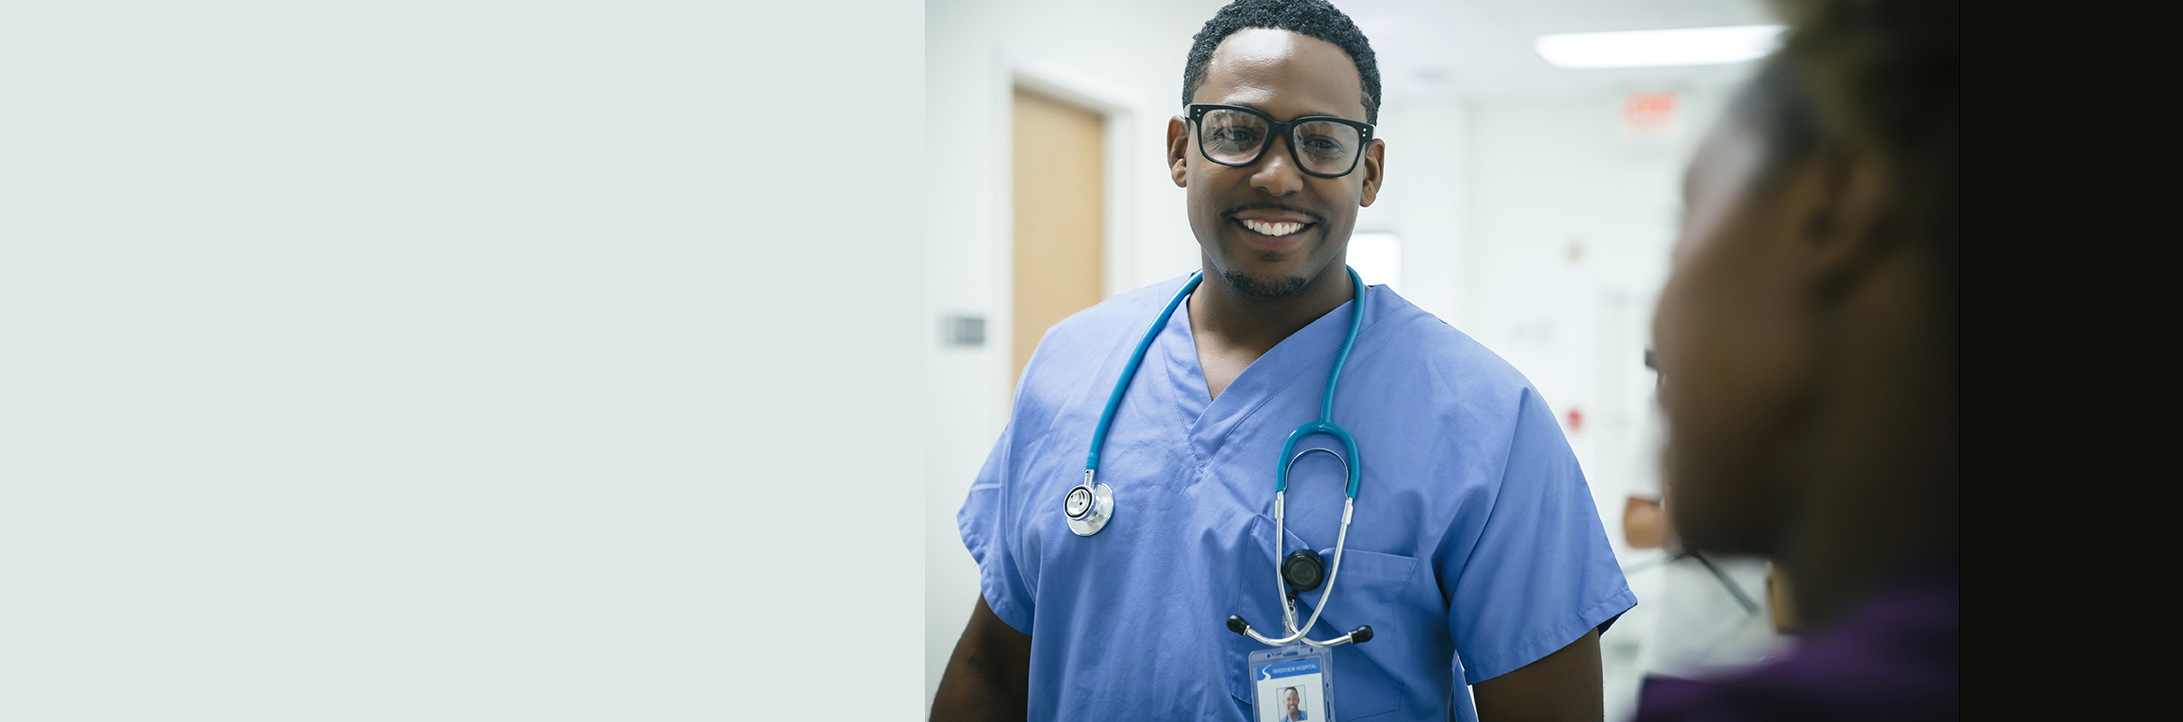 a black male doctor or nurse in a hospital hallway